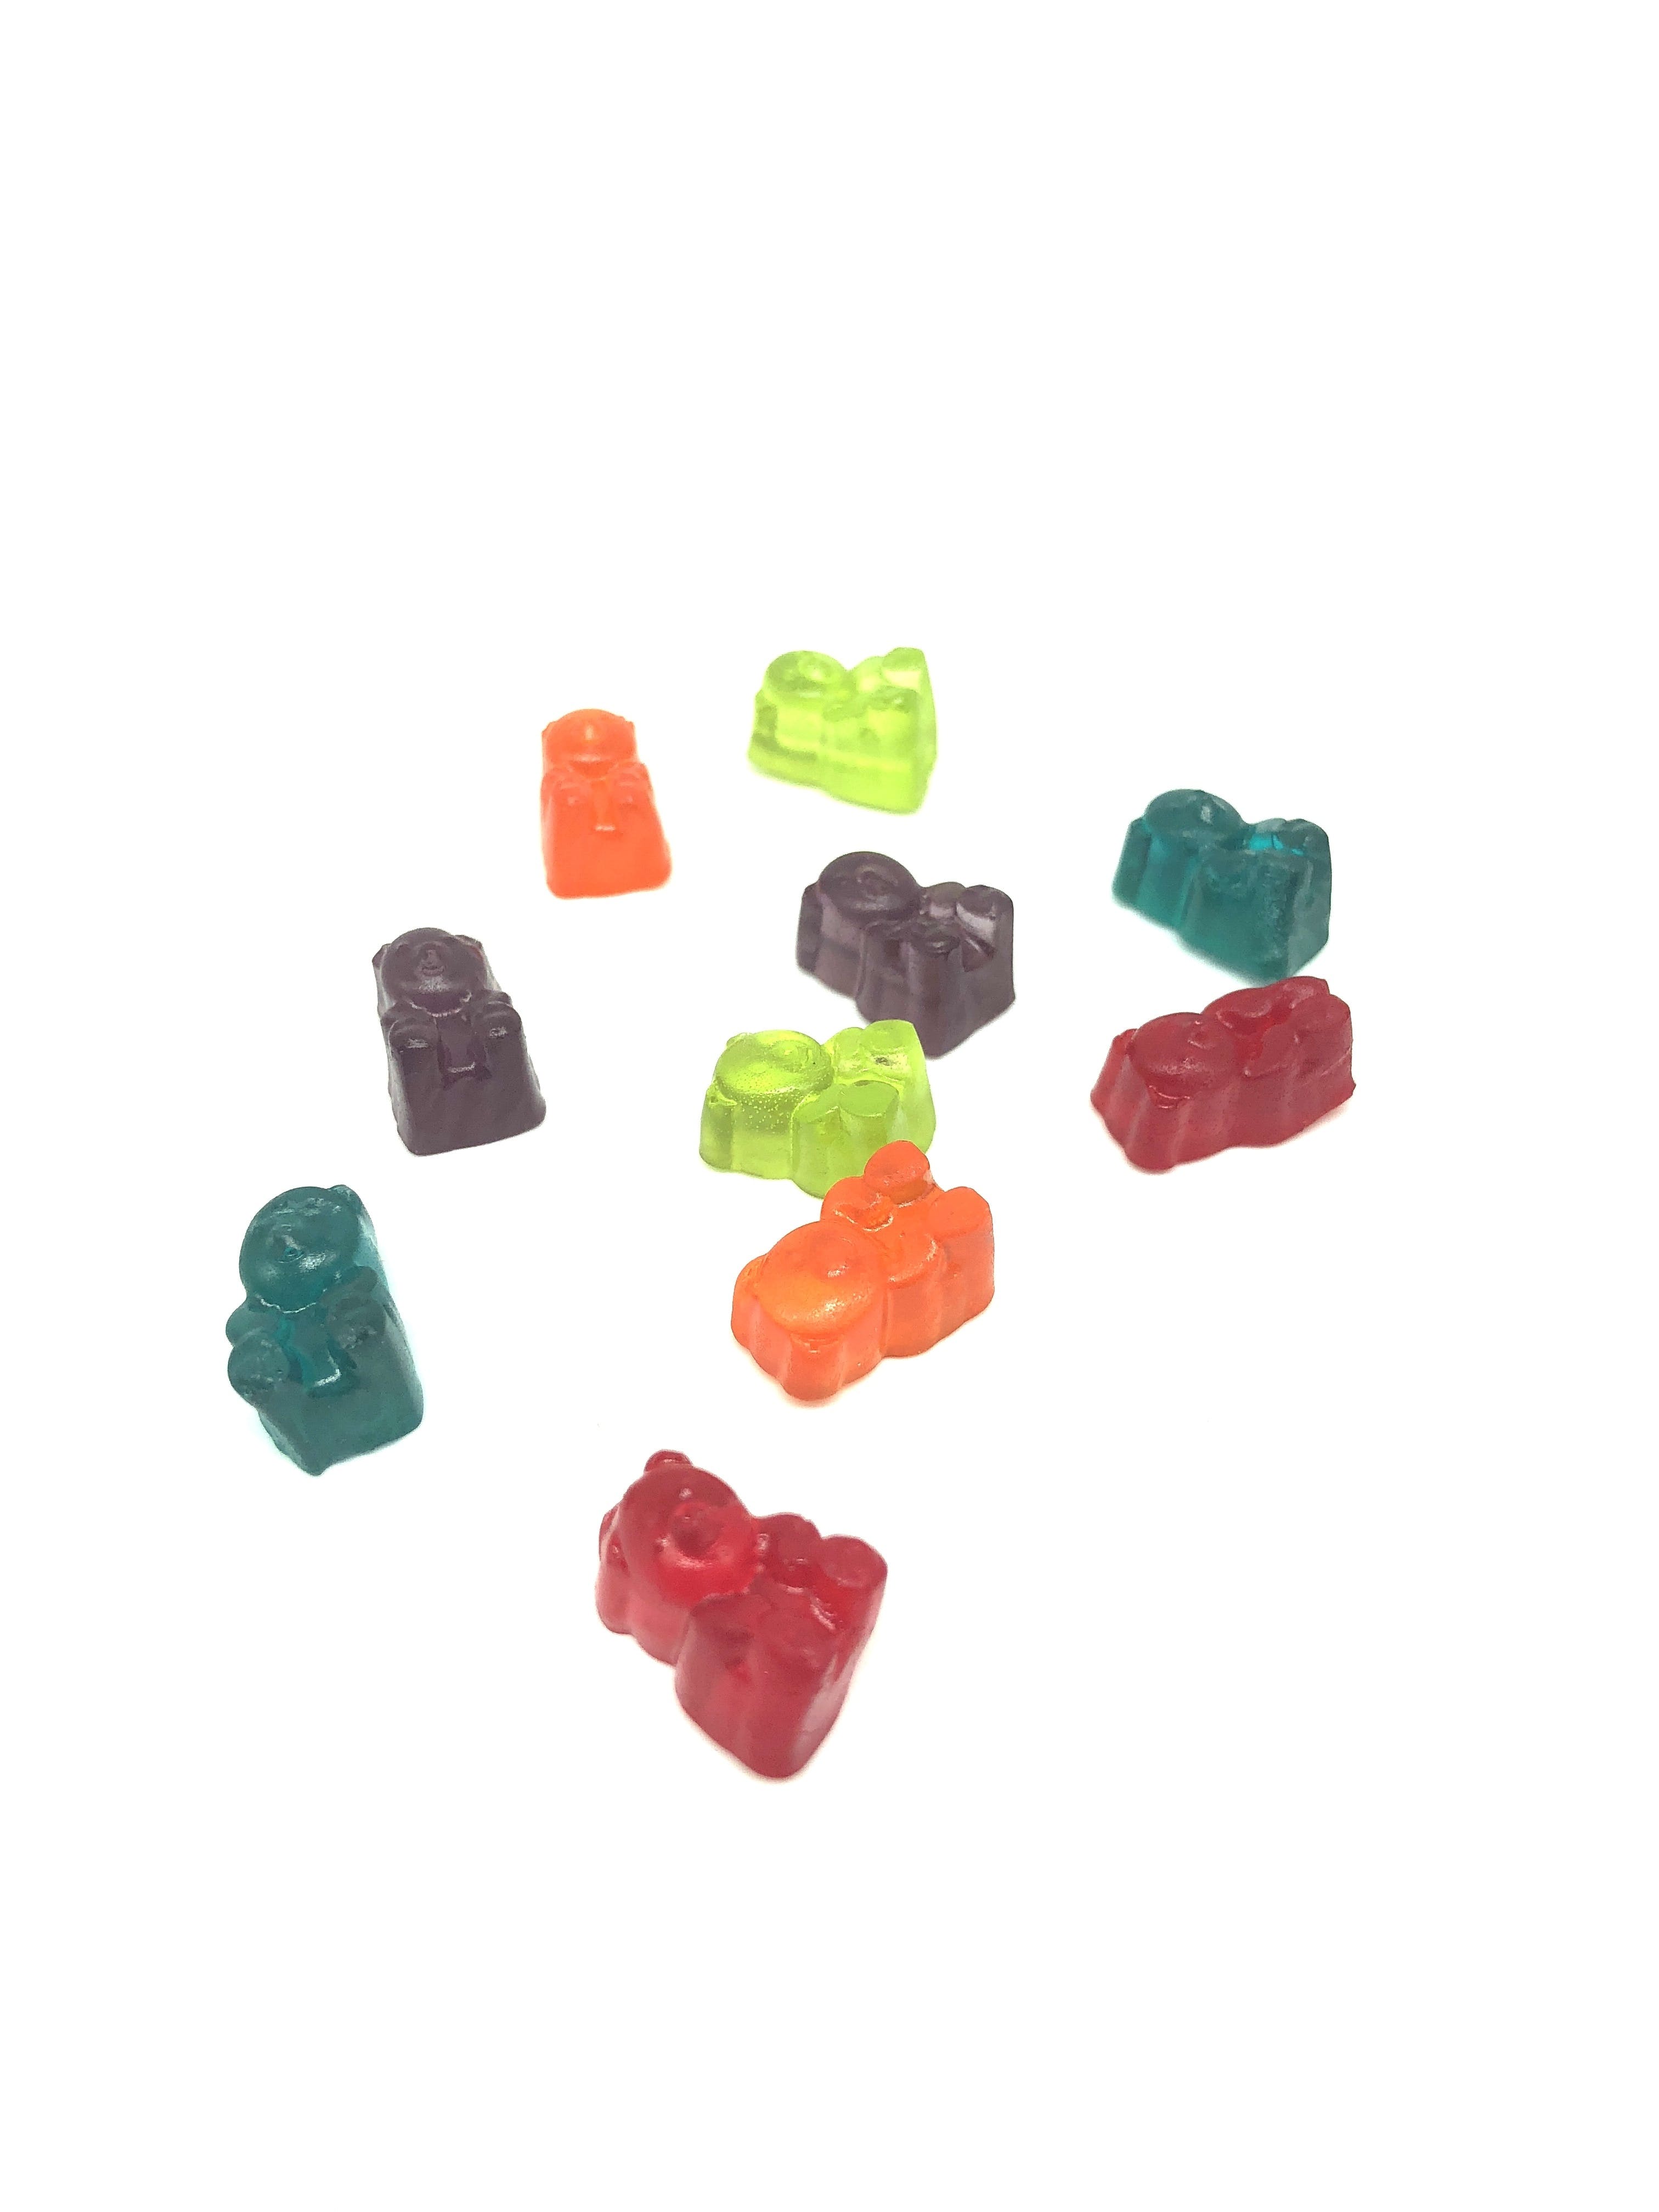 edible-sinsemilla-gummie-bears